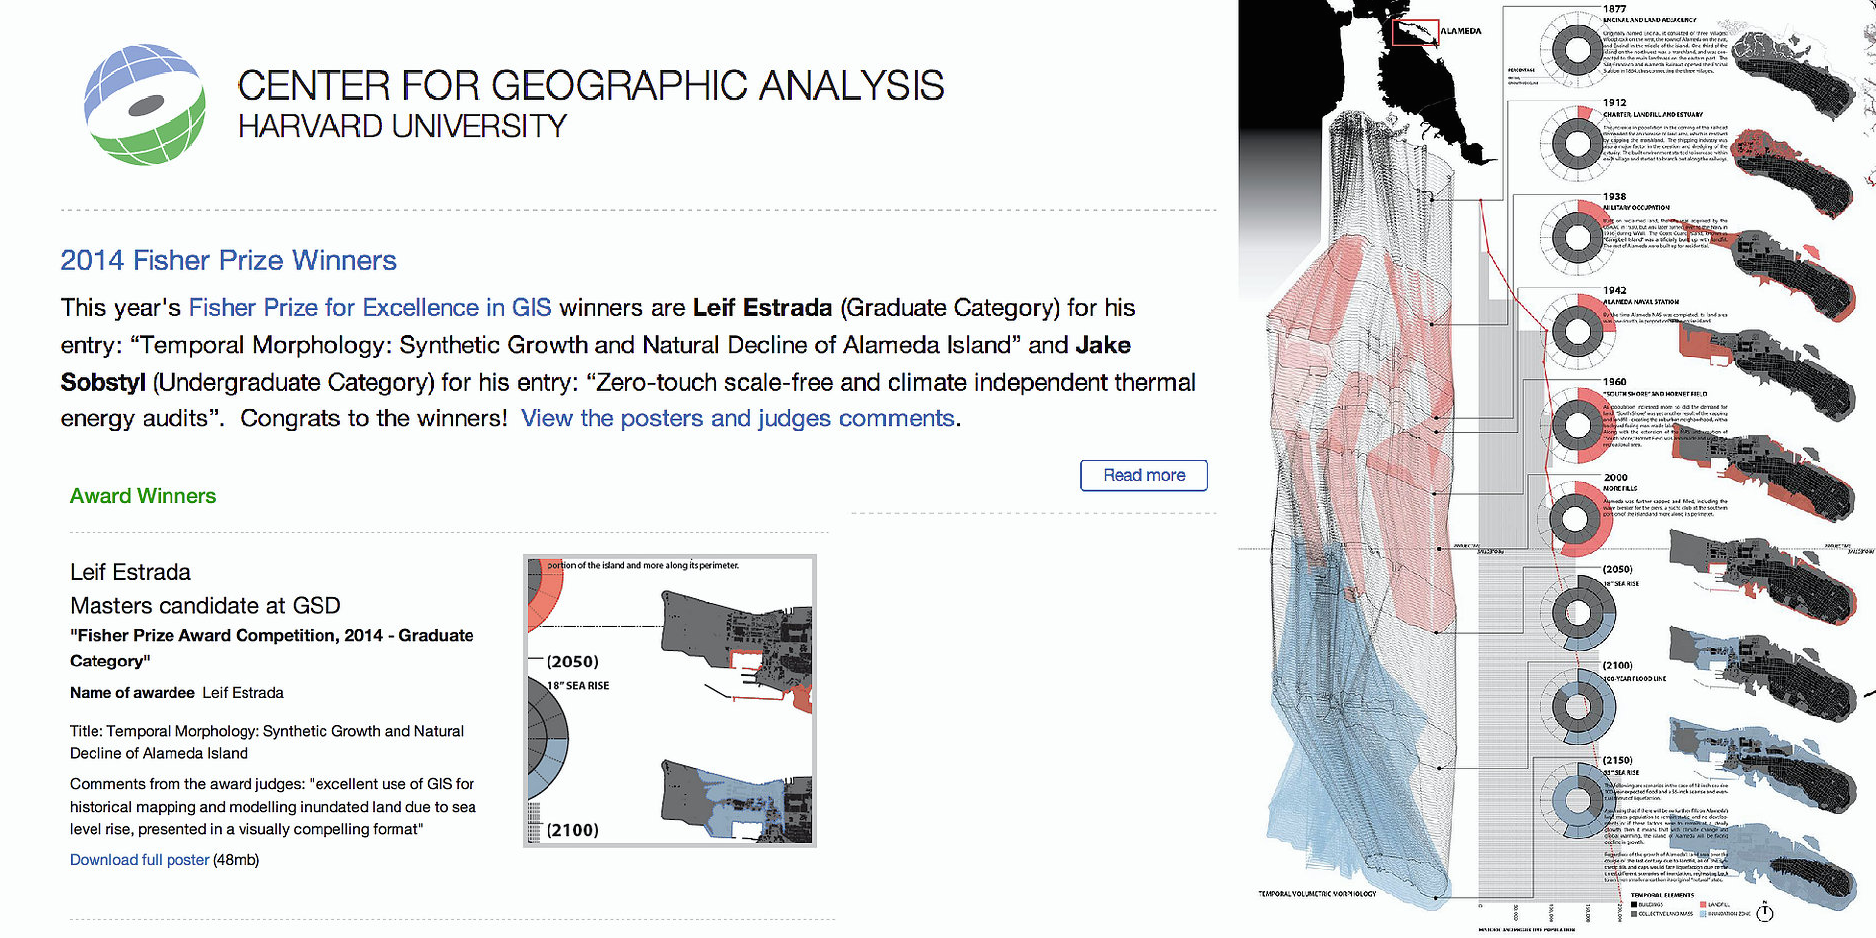 Howard T Fisher Prize Award for Geographic Information Science at Harvard University (Harvard CGA)